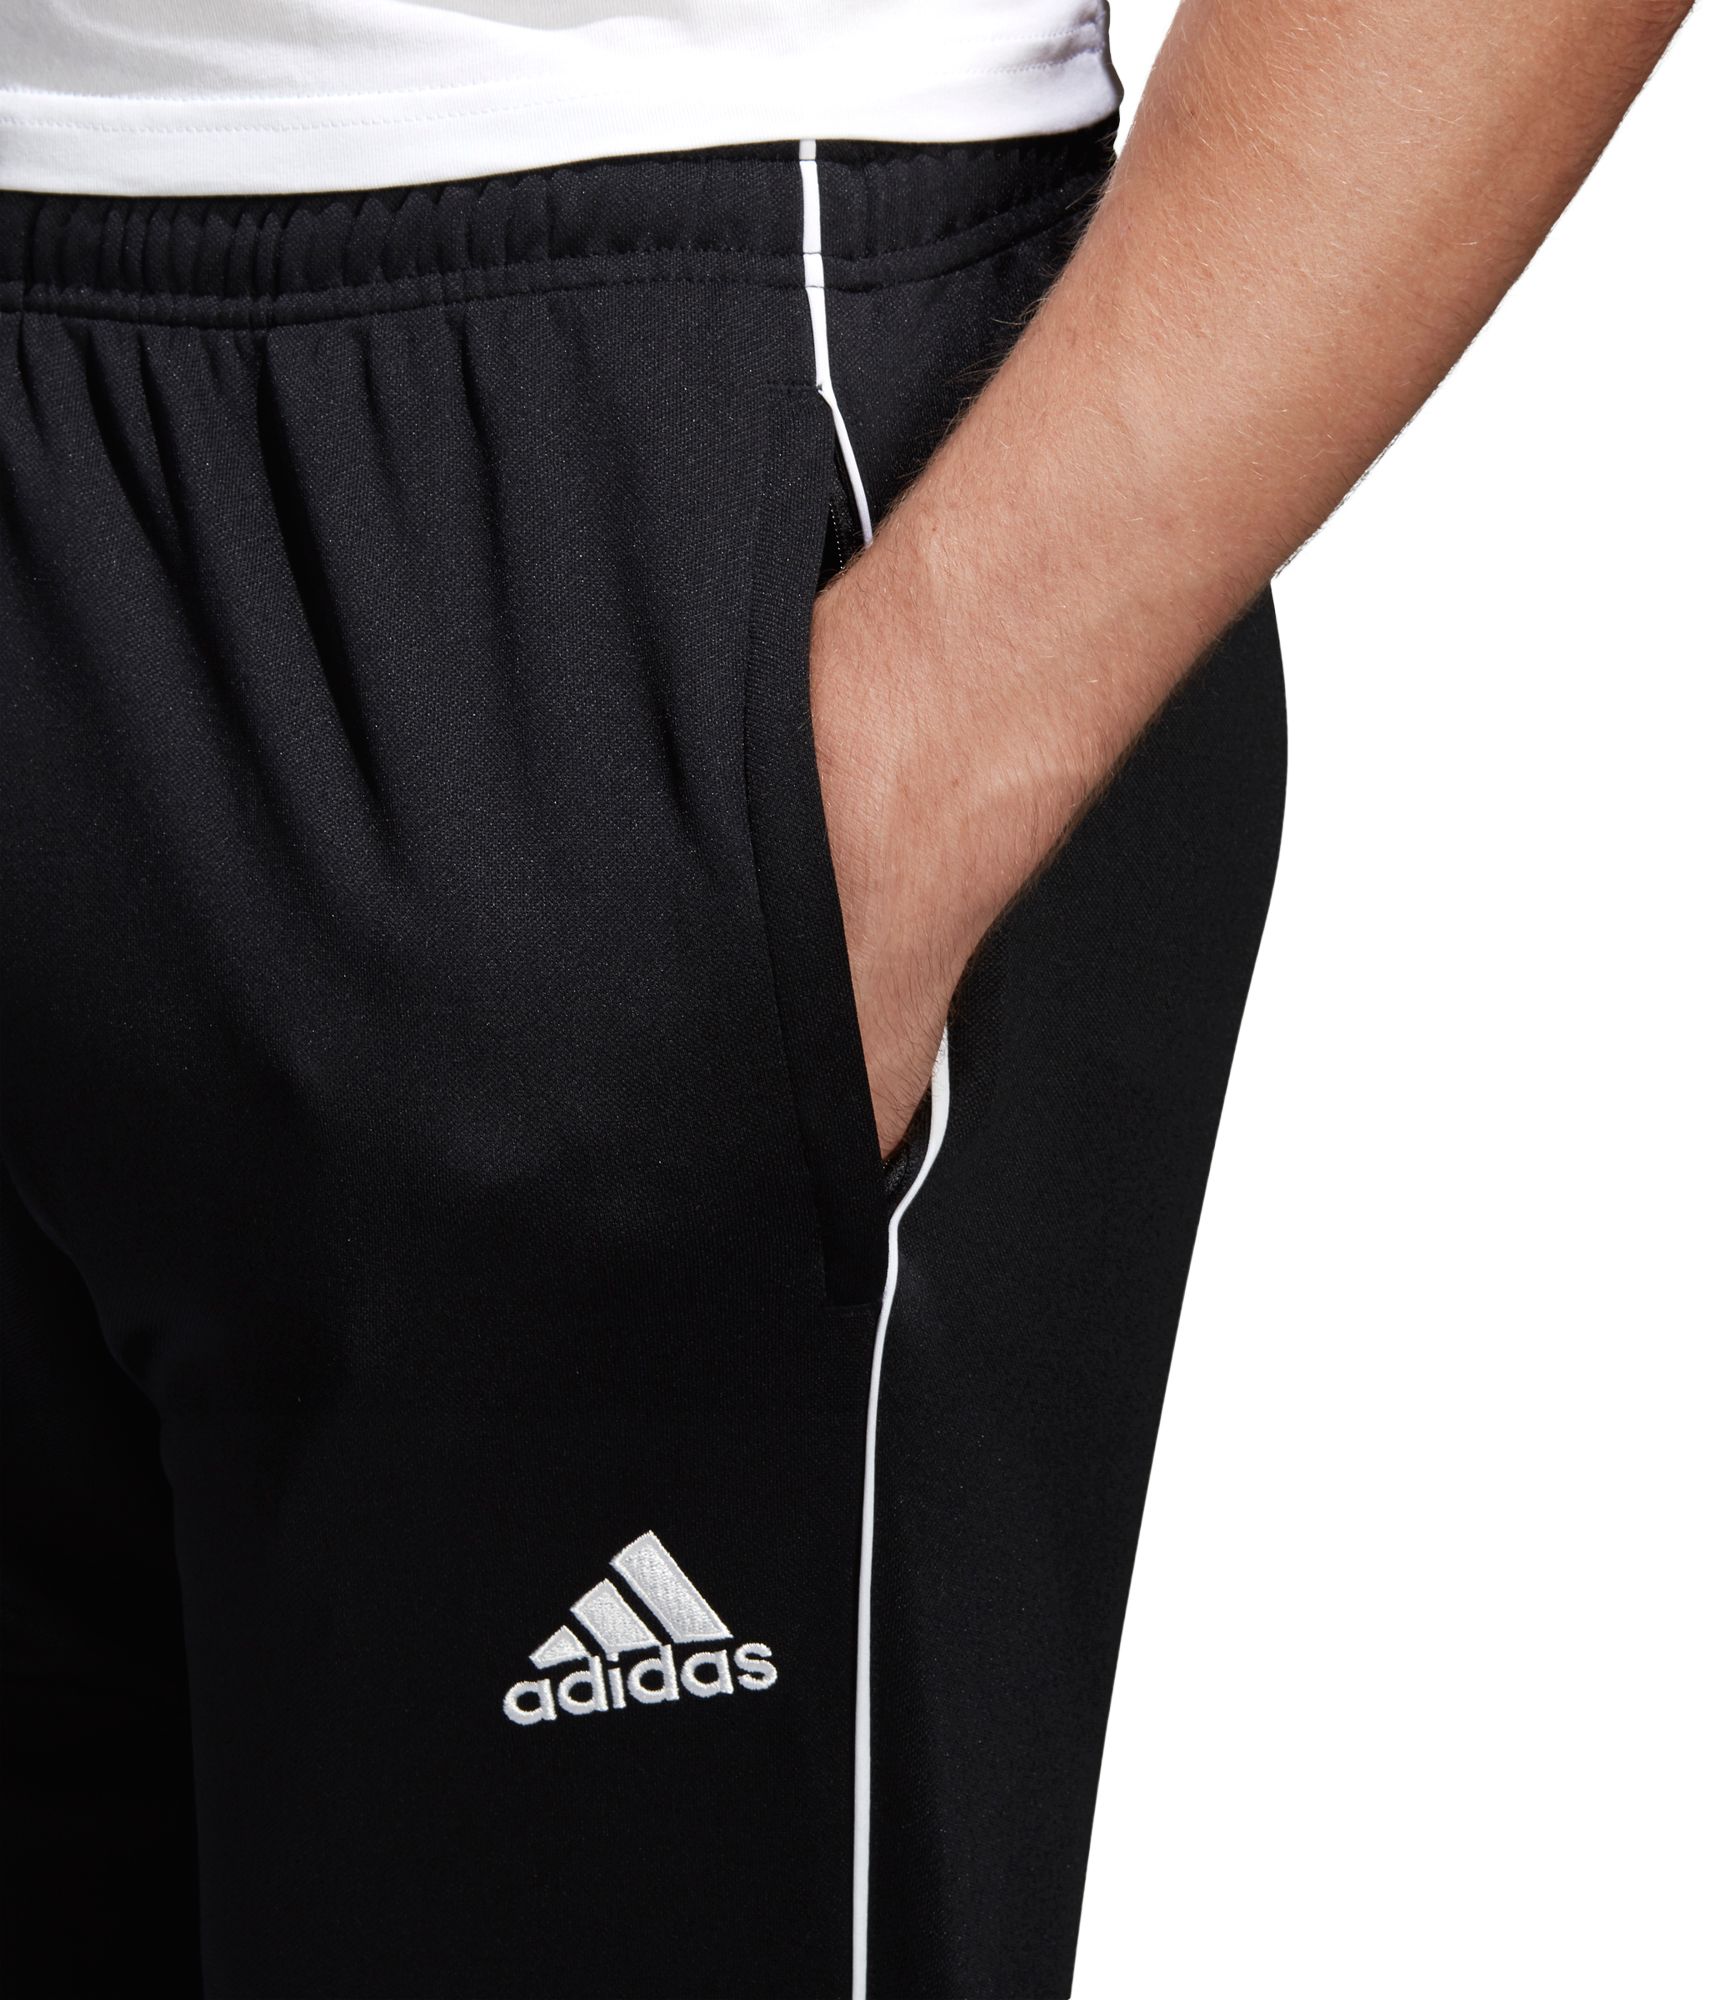 adidas men's core 18 training pants